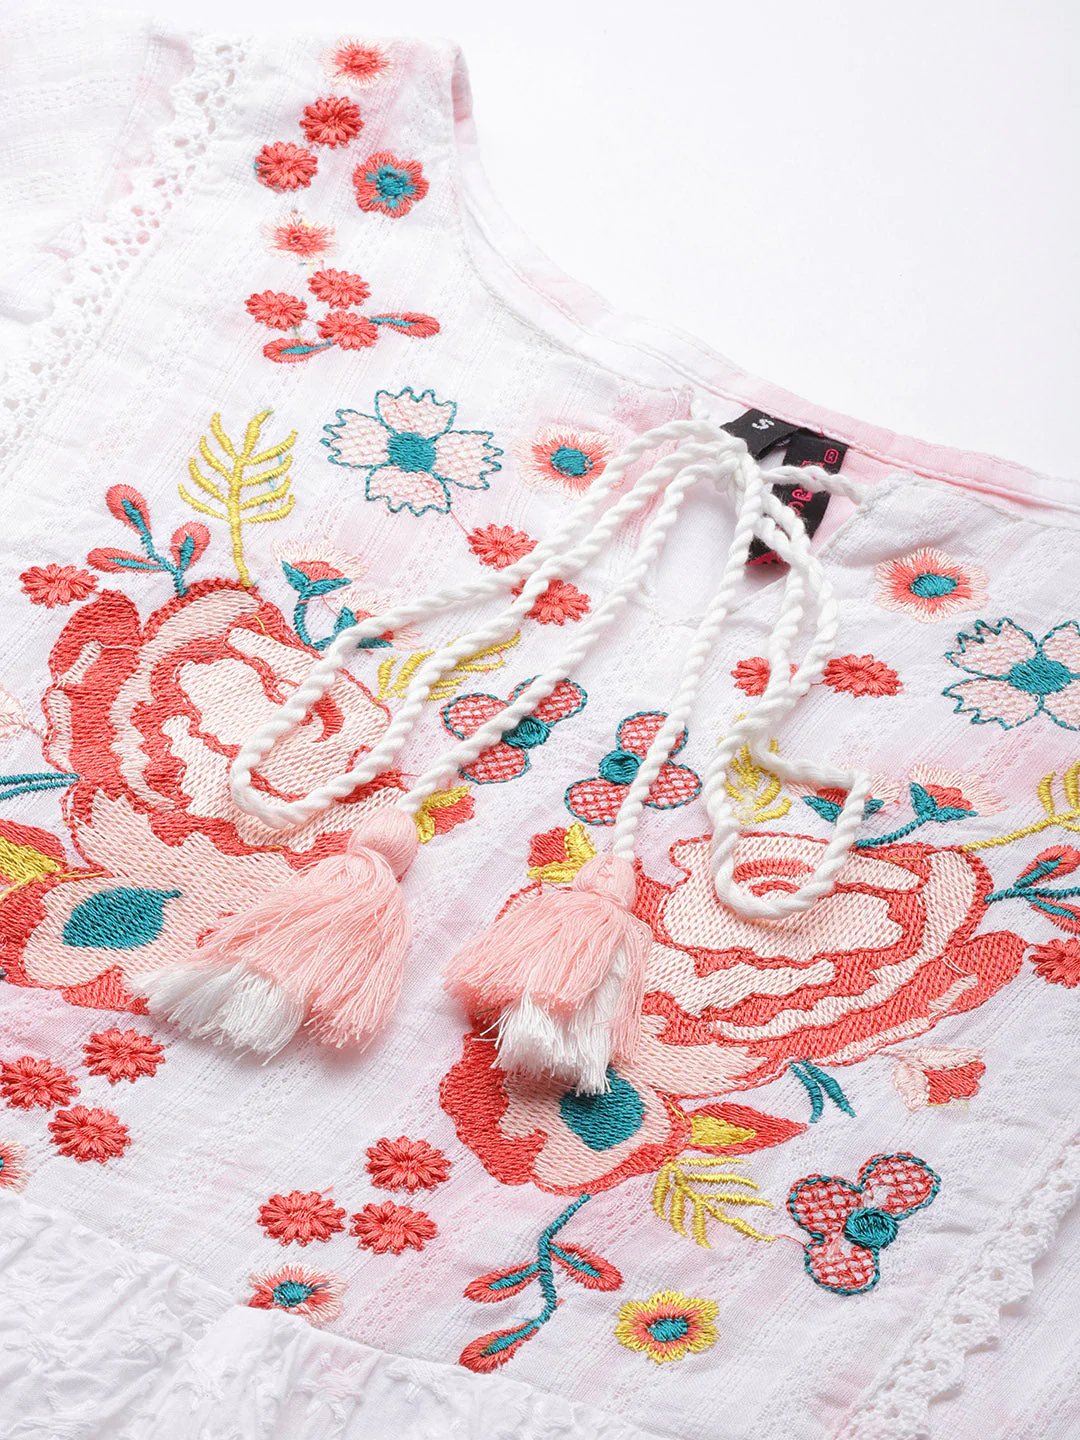 Art Avenue Women's White & Pink Embroidered A-Line Dress - ART AVENUE